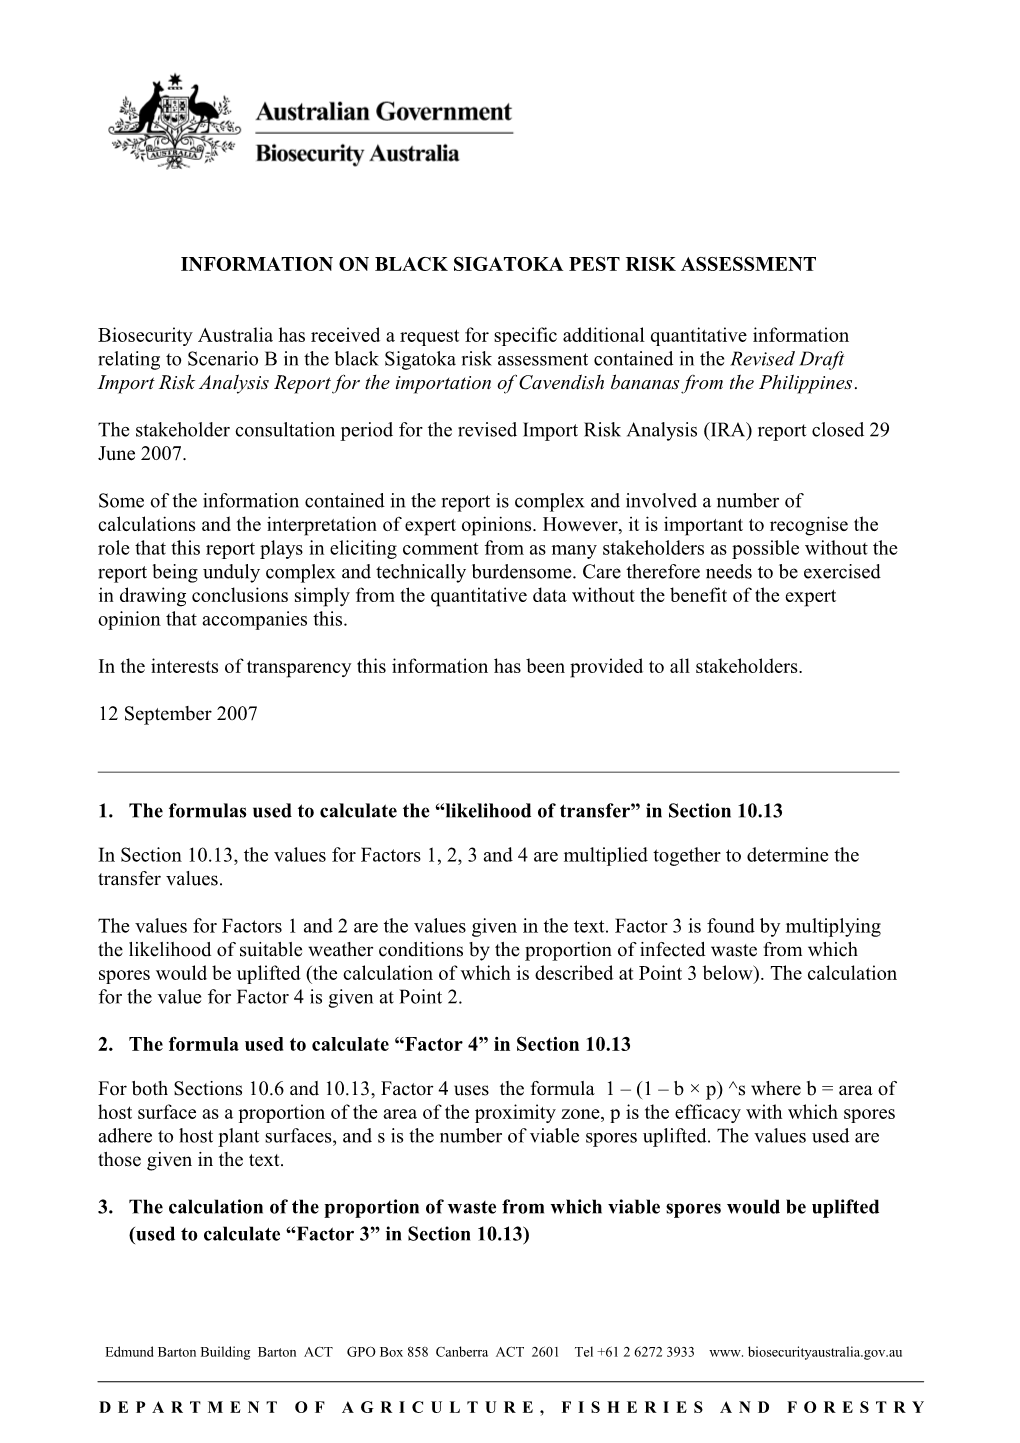 Information on Black Sigatoka Pest Risk Assessment